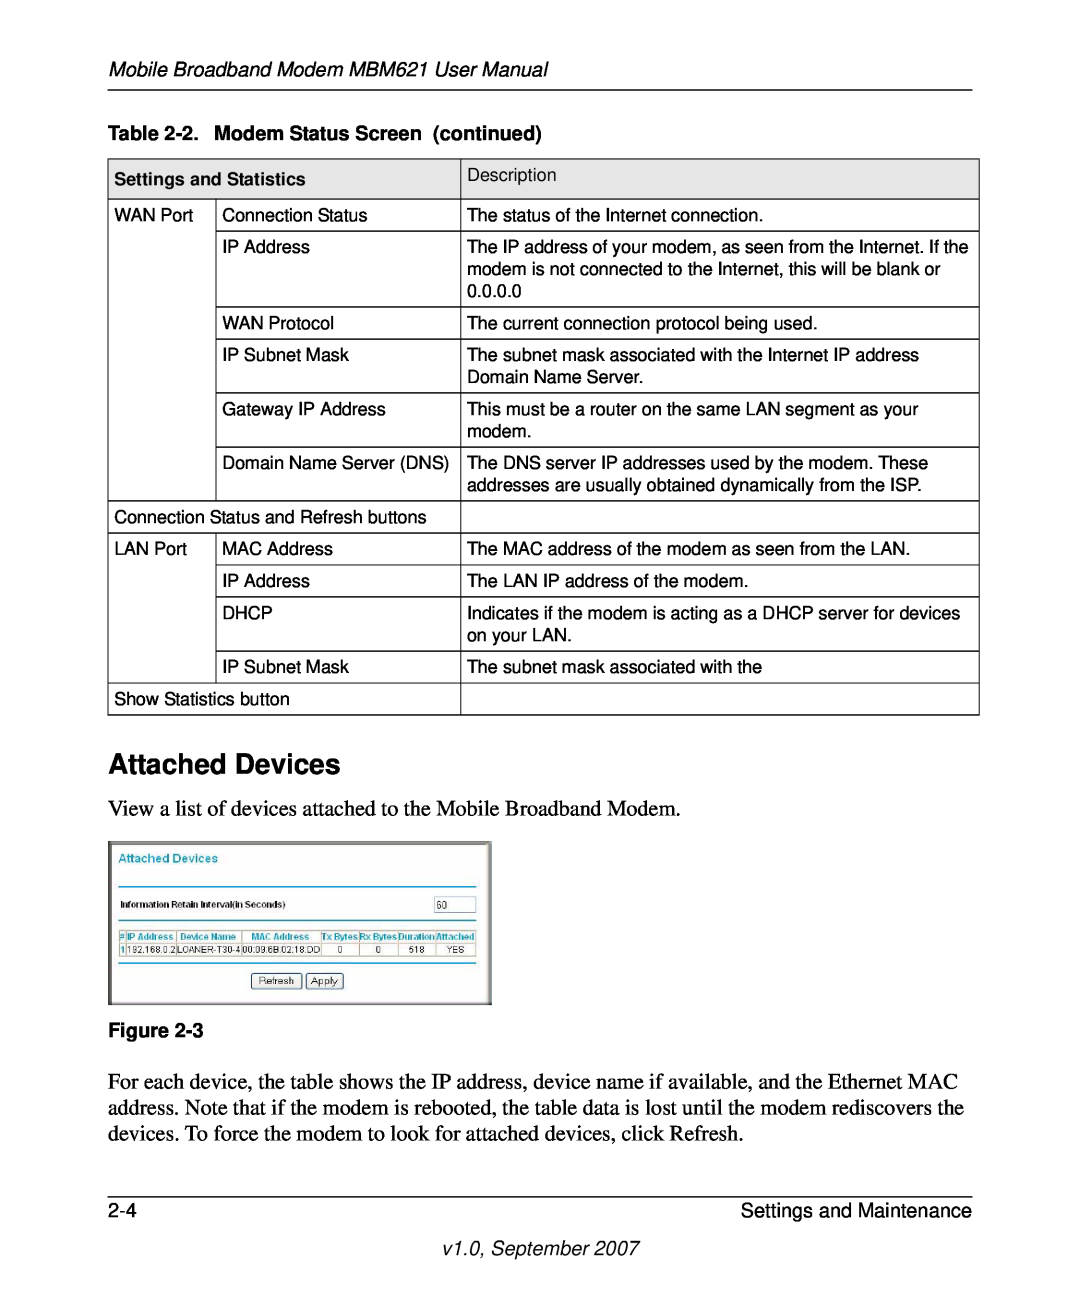 NETGEAR Attached Devices, Mobile Broadband Modem MBM621 User Manual, Modem Status Screen continued, v1.0, September 